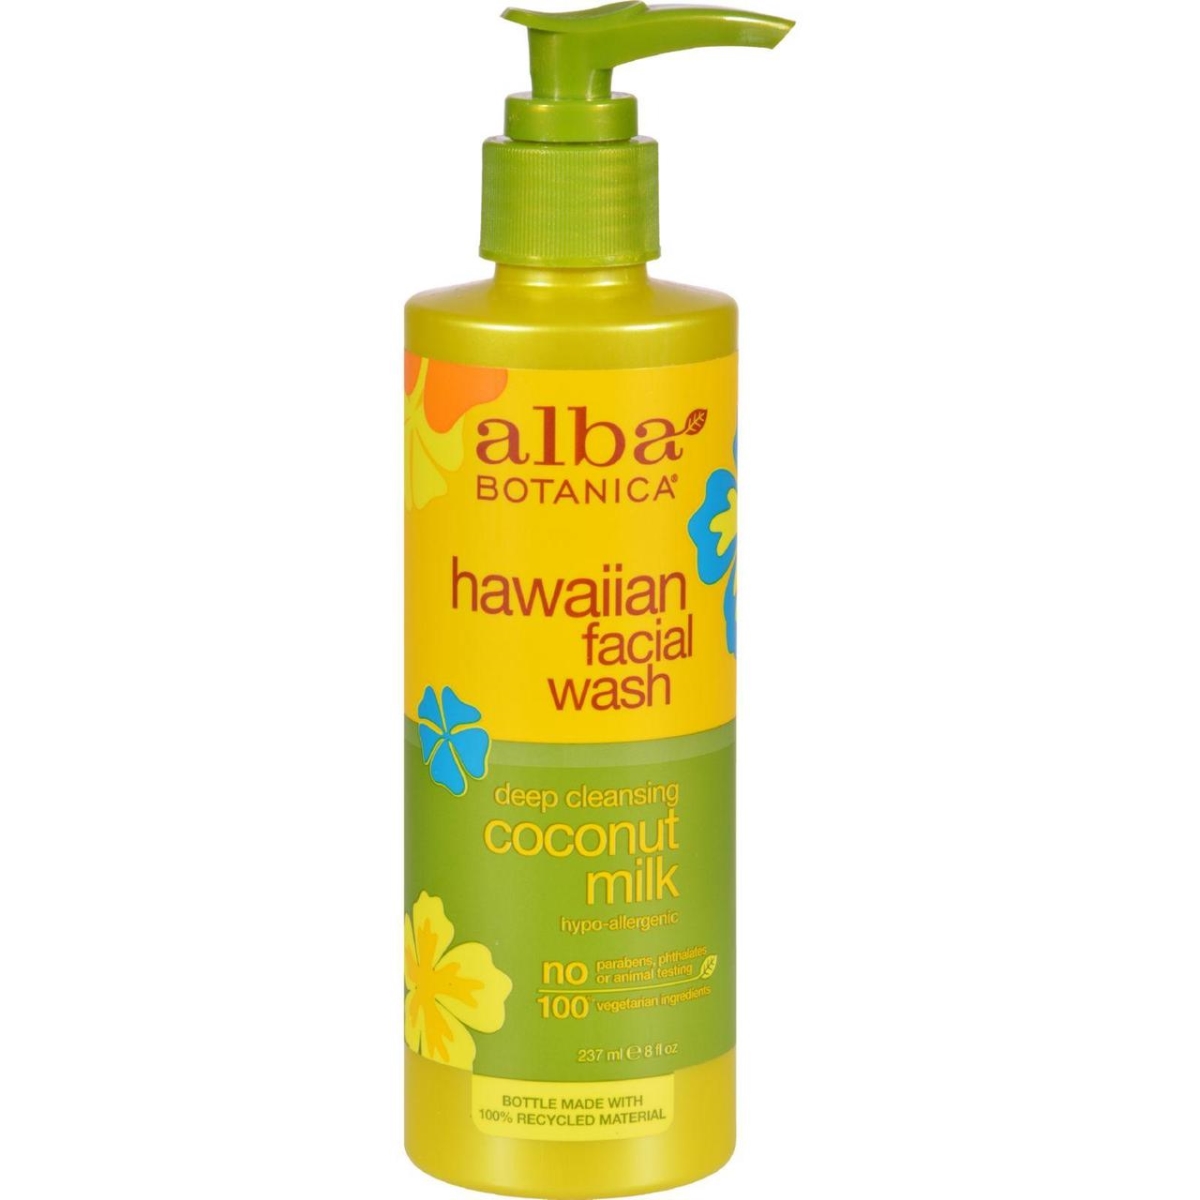 Hg0389957 8 Fl Oz Hawaiian Facial Wash, Coconut Milk